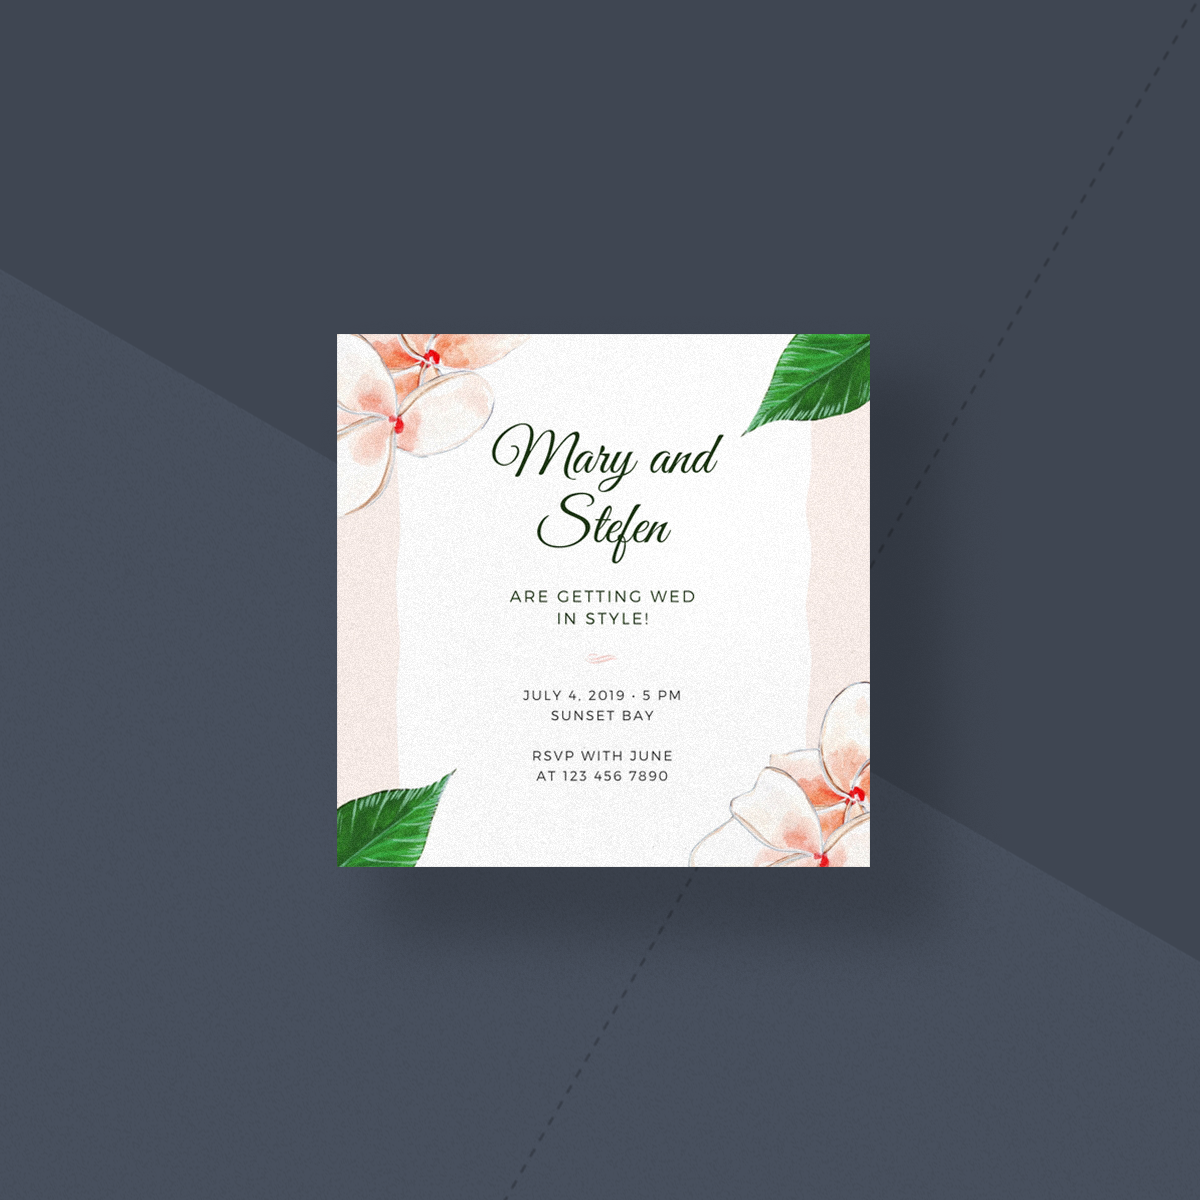 wedding invitation sizes - canva's design wiki size guide